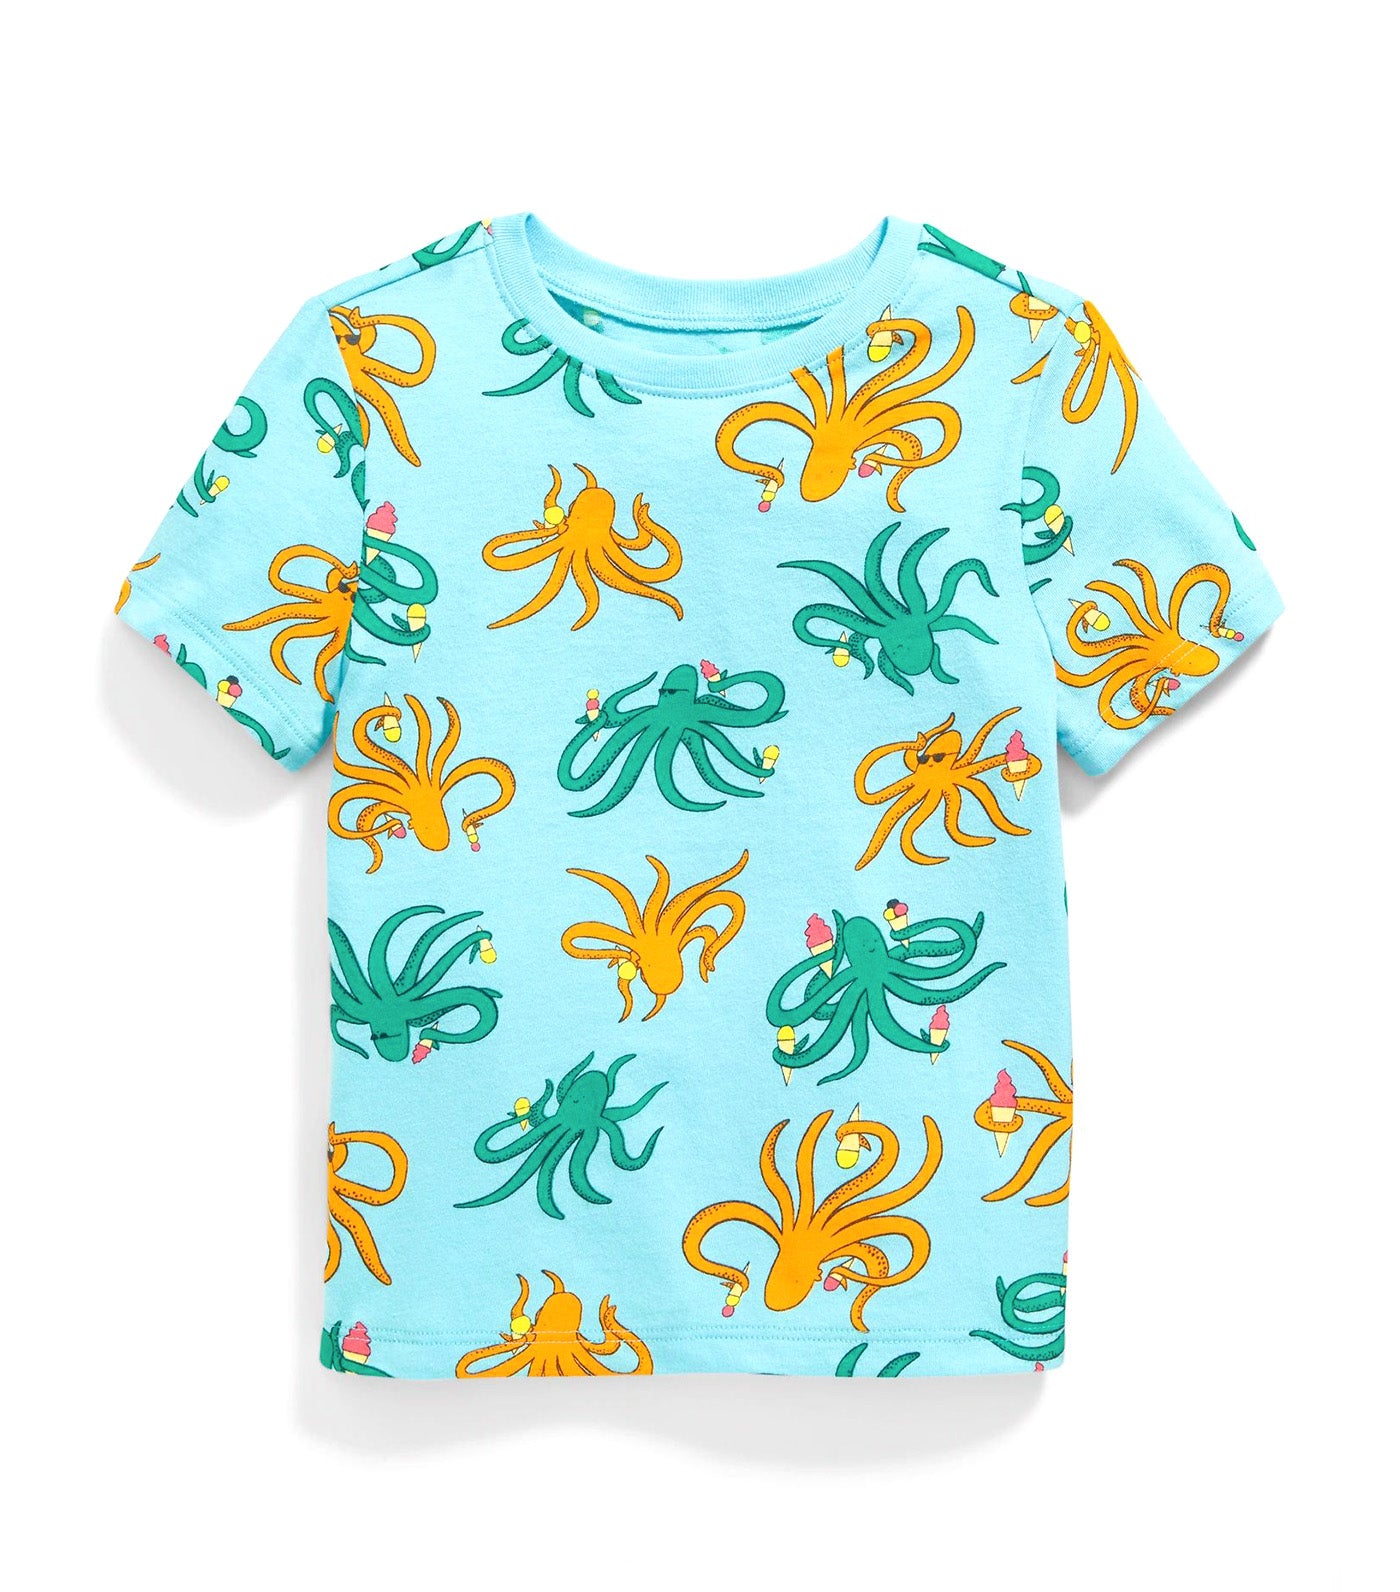 Unisex Printed Short-Sleeve T-Shirt for Toddler Octopus